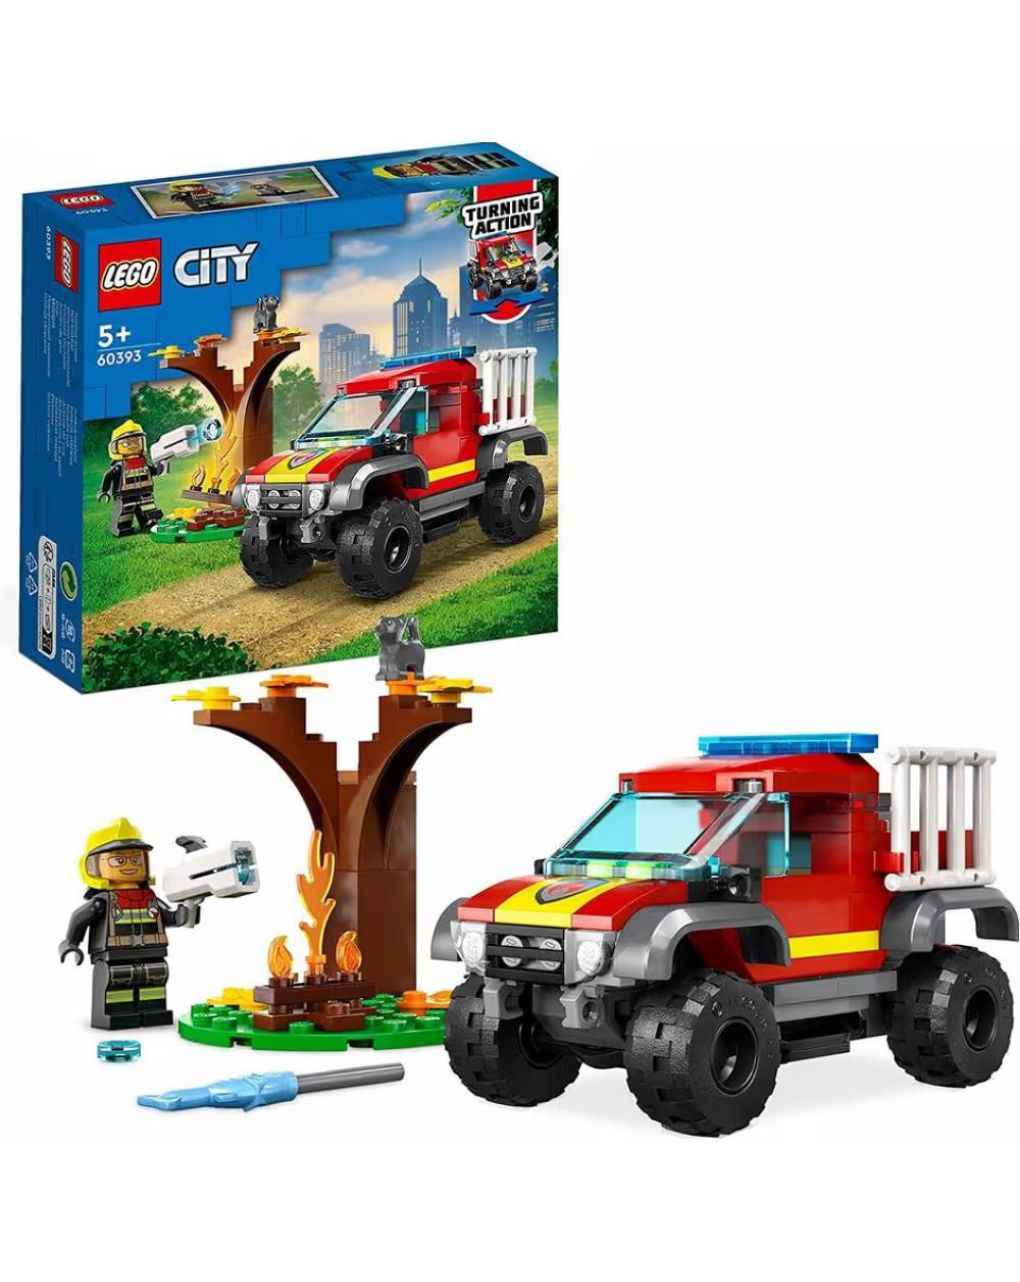 Lego city 4x4 fire truck rescue 60393